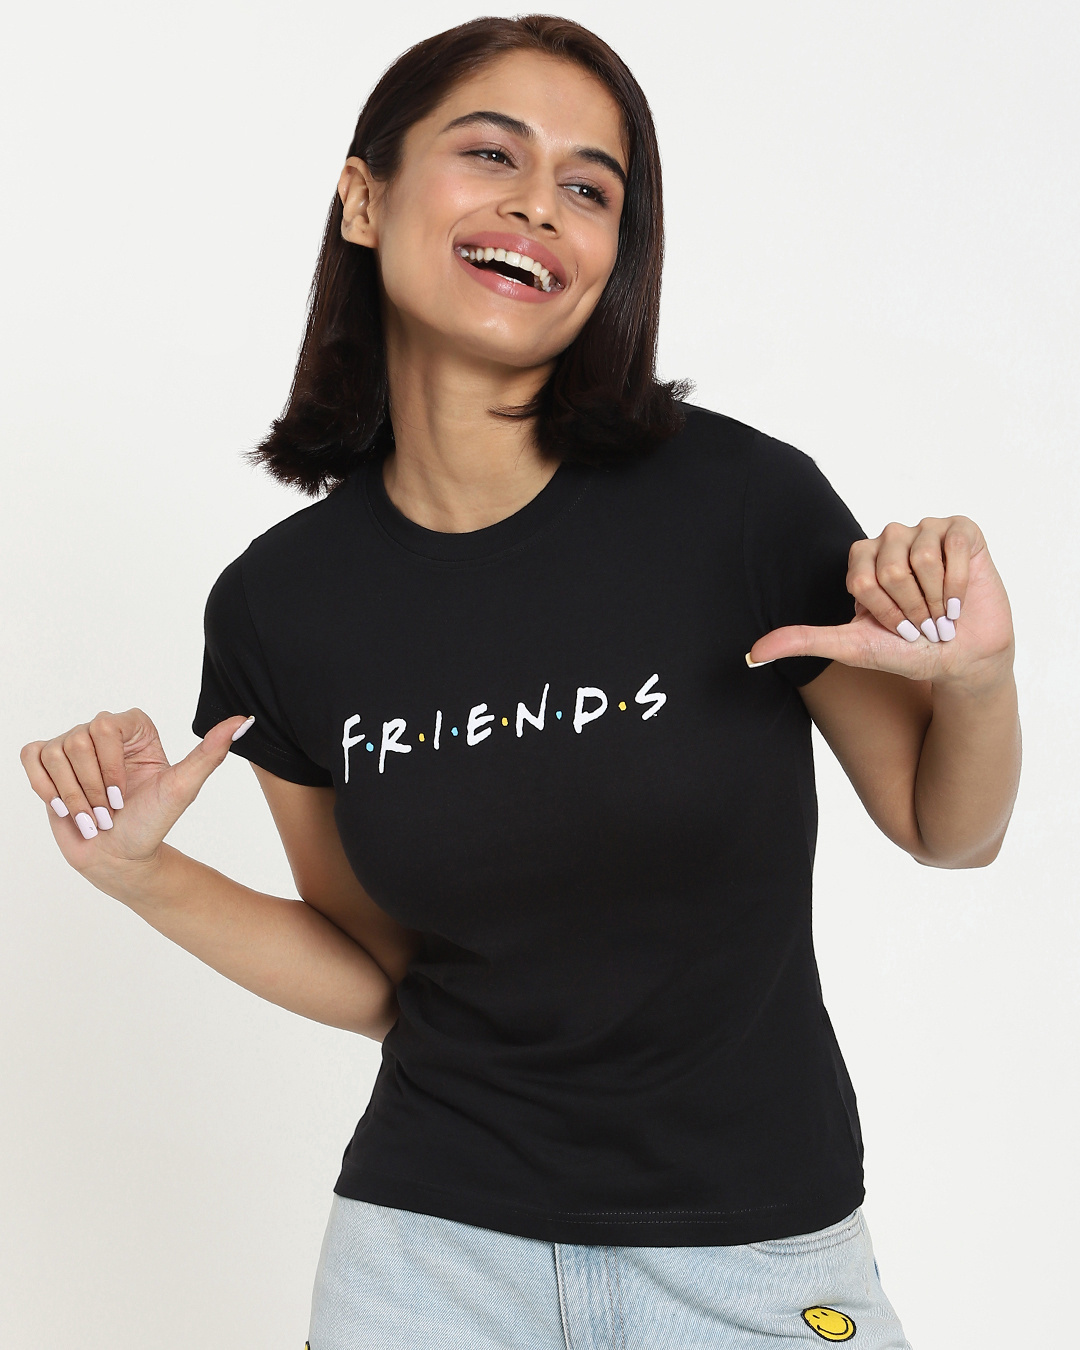 Buy Women's T-shirts Online